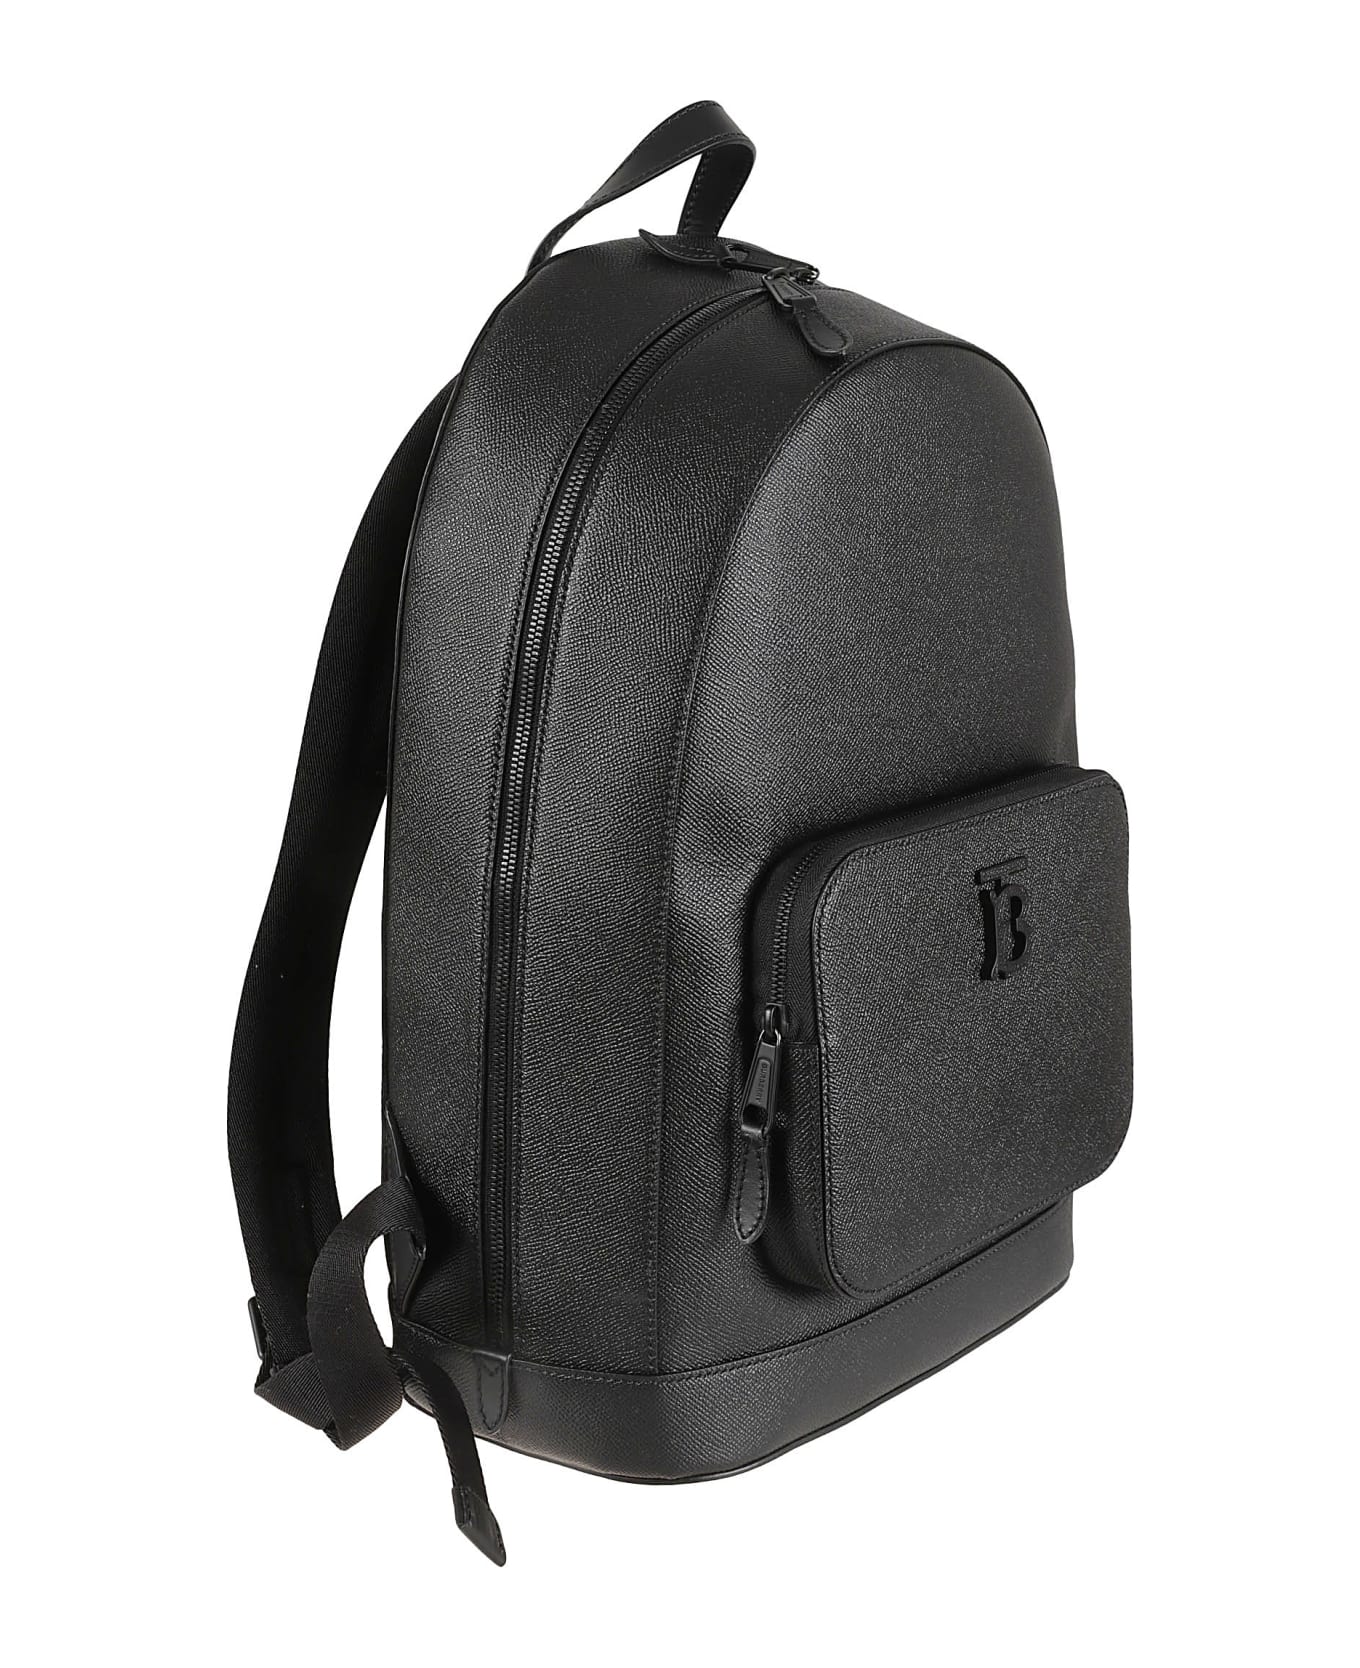 Burberry Logo Backpack - Black